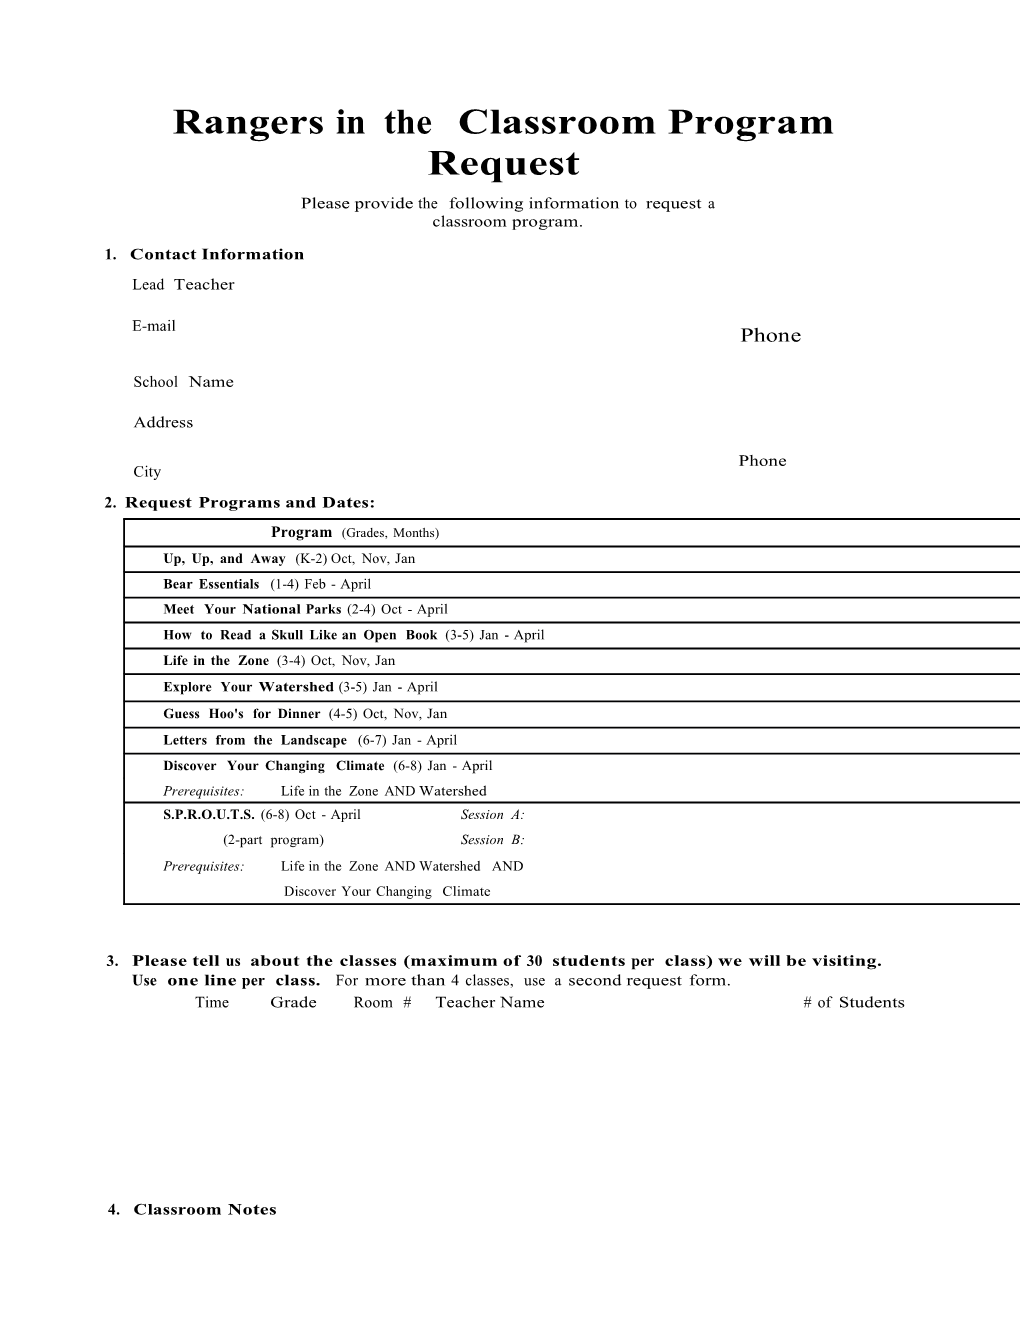 RITC Request Form